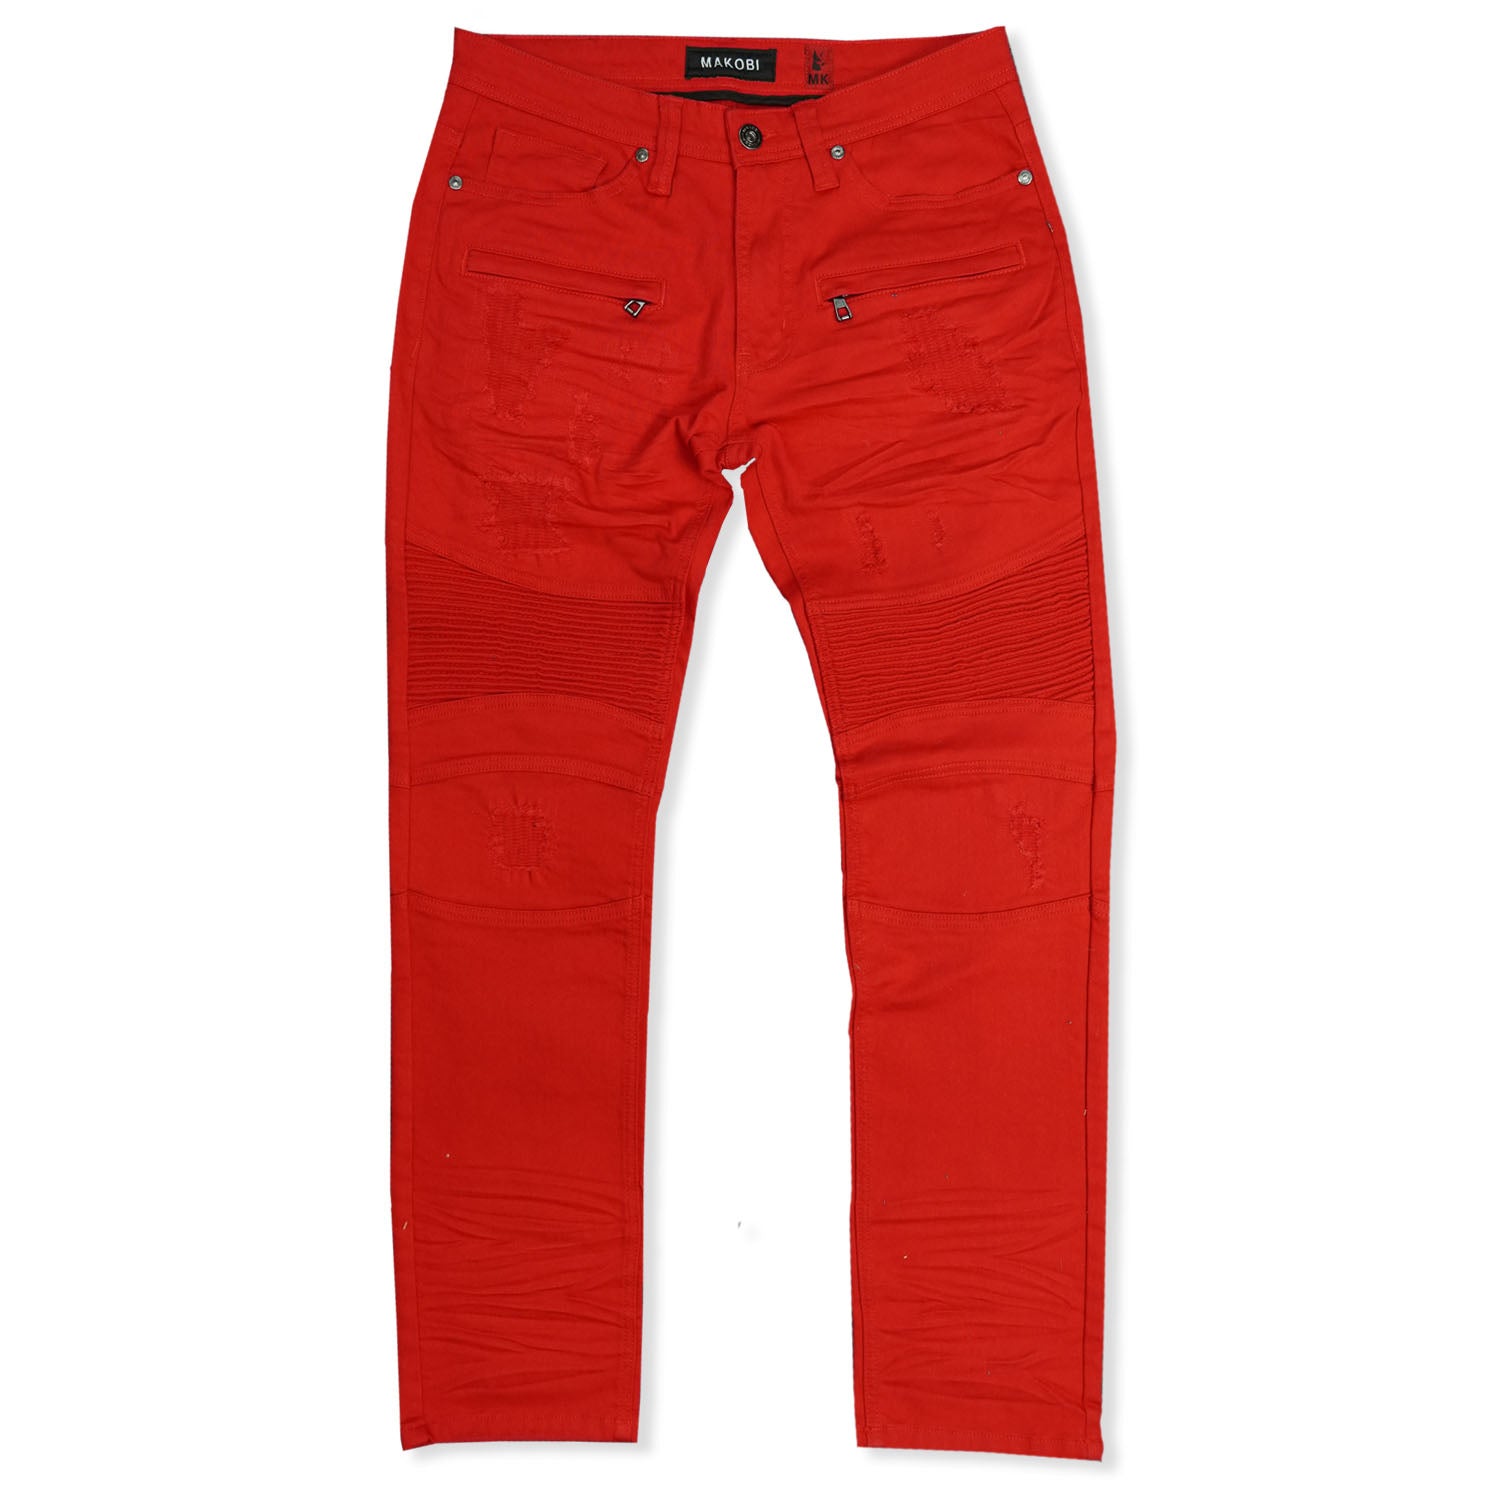 M1786 Makobi Prado Biker Jeans pẹlu Rip & Tunṣe - Red